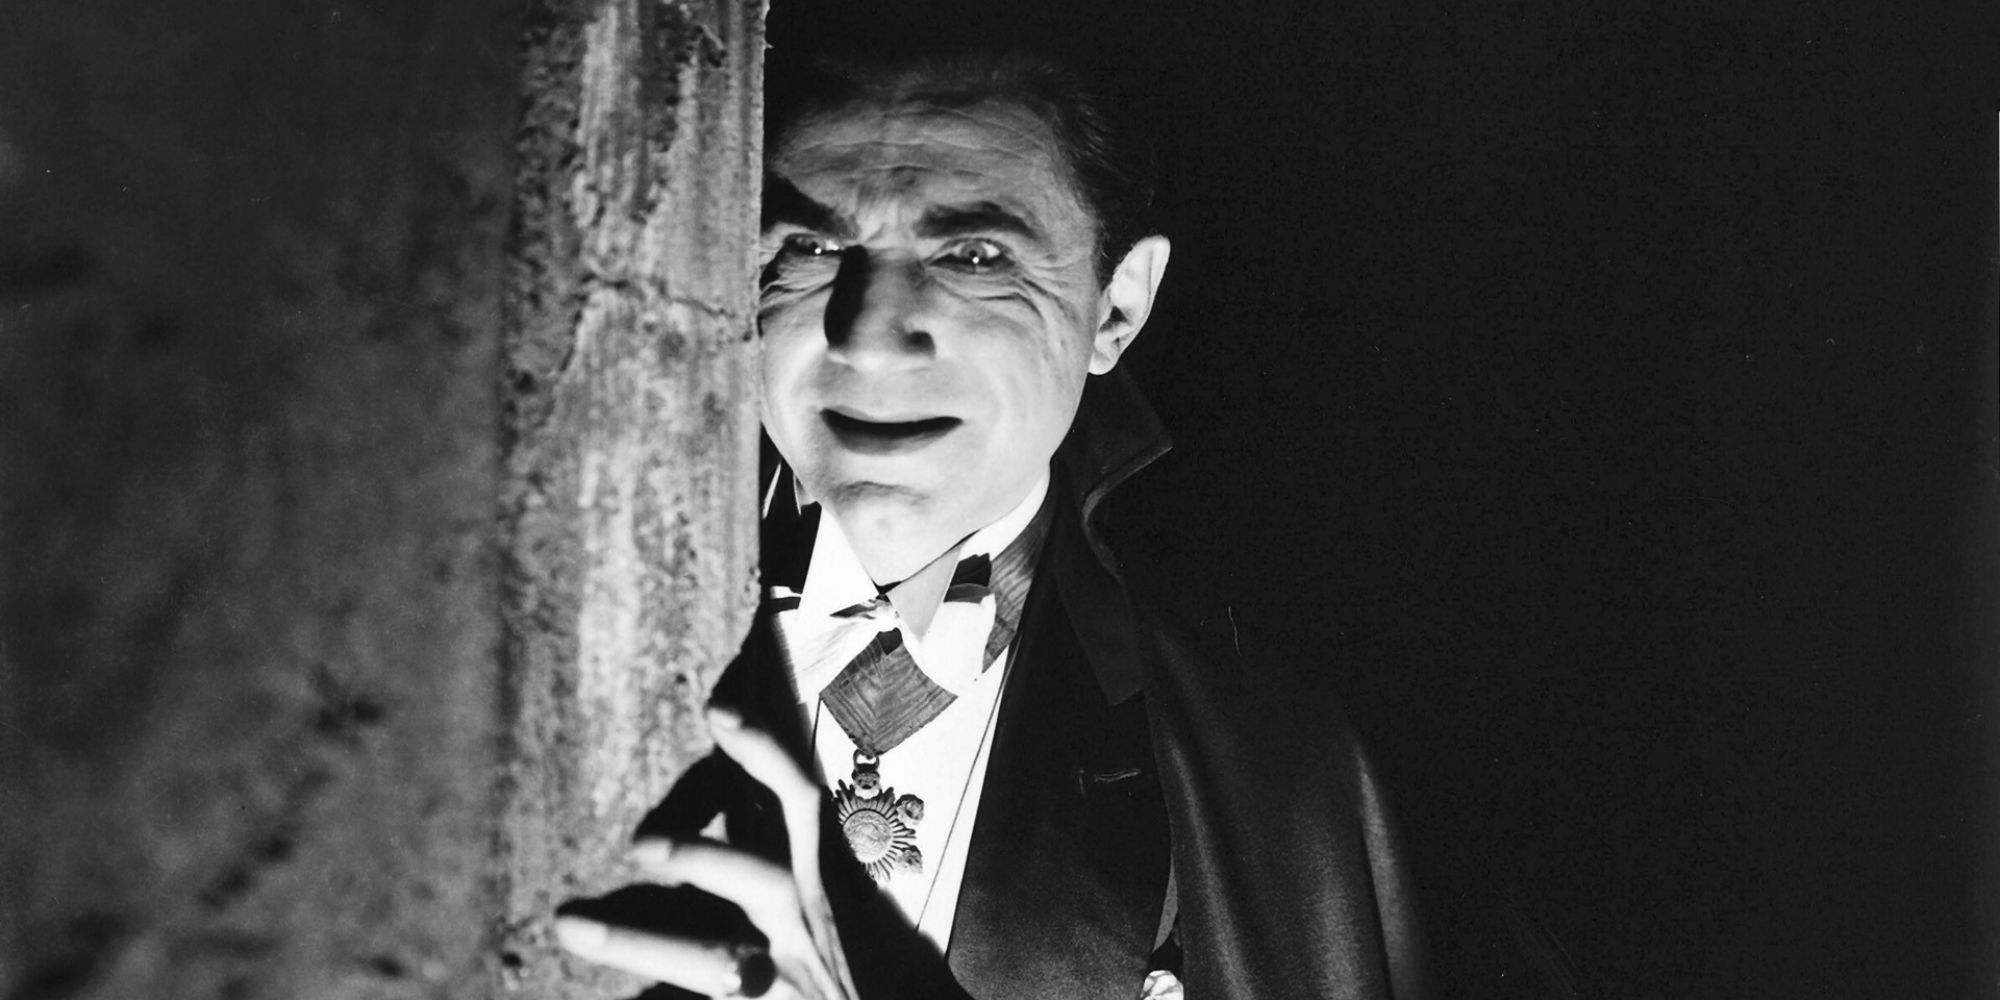 Count Dracula tersenyum mengancam dari balik sudut yang gelap